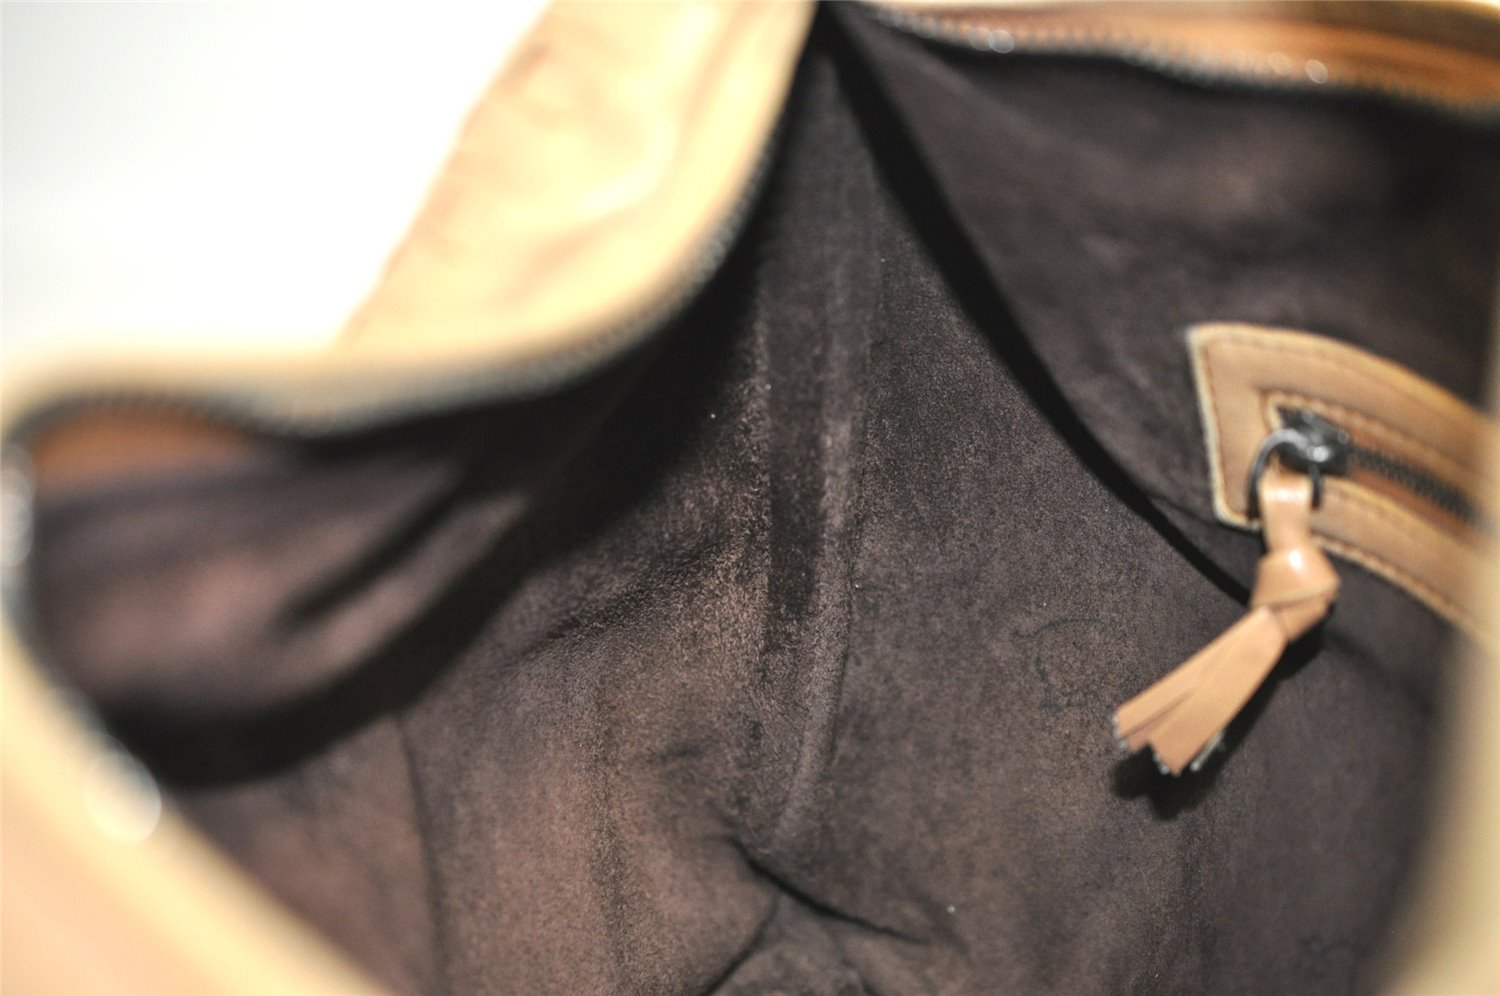 Authentic BOTTEGA VENETA Intrecciato Leather Shoulder Hand Bag Beige 1000J